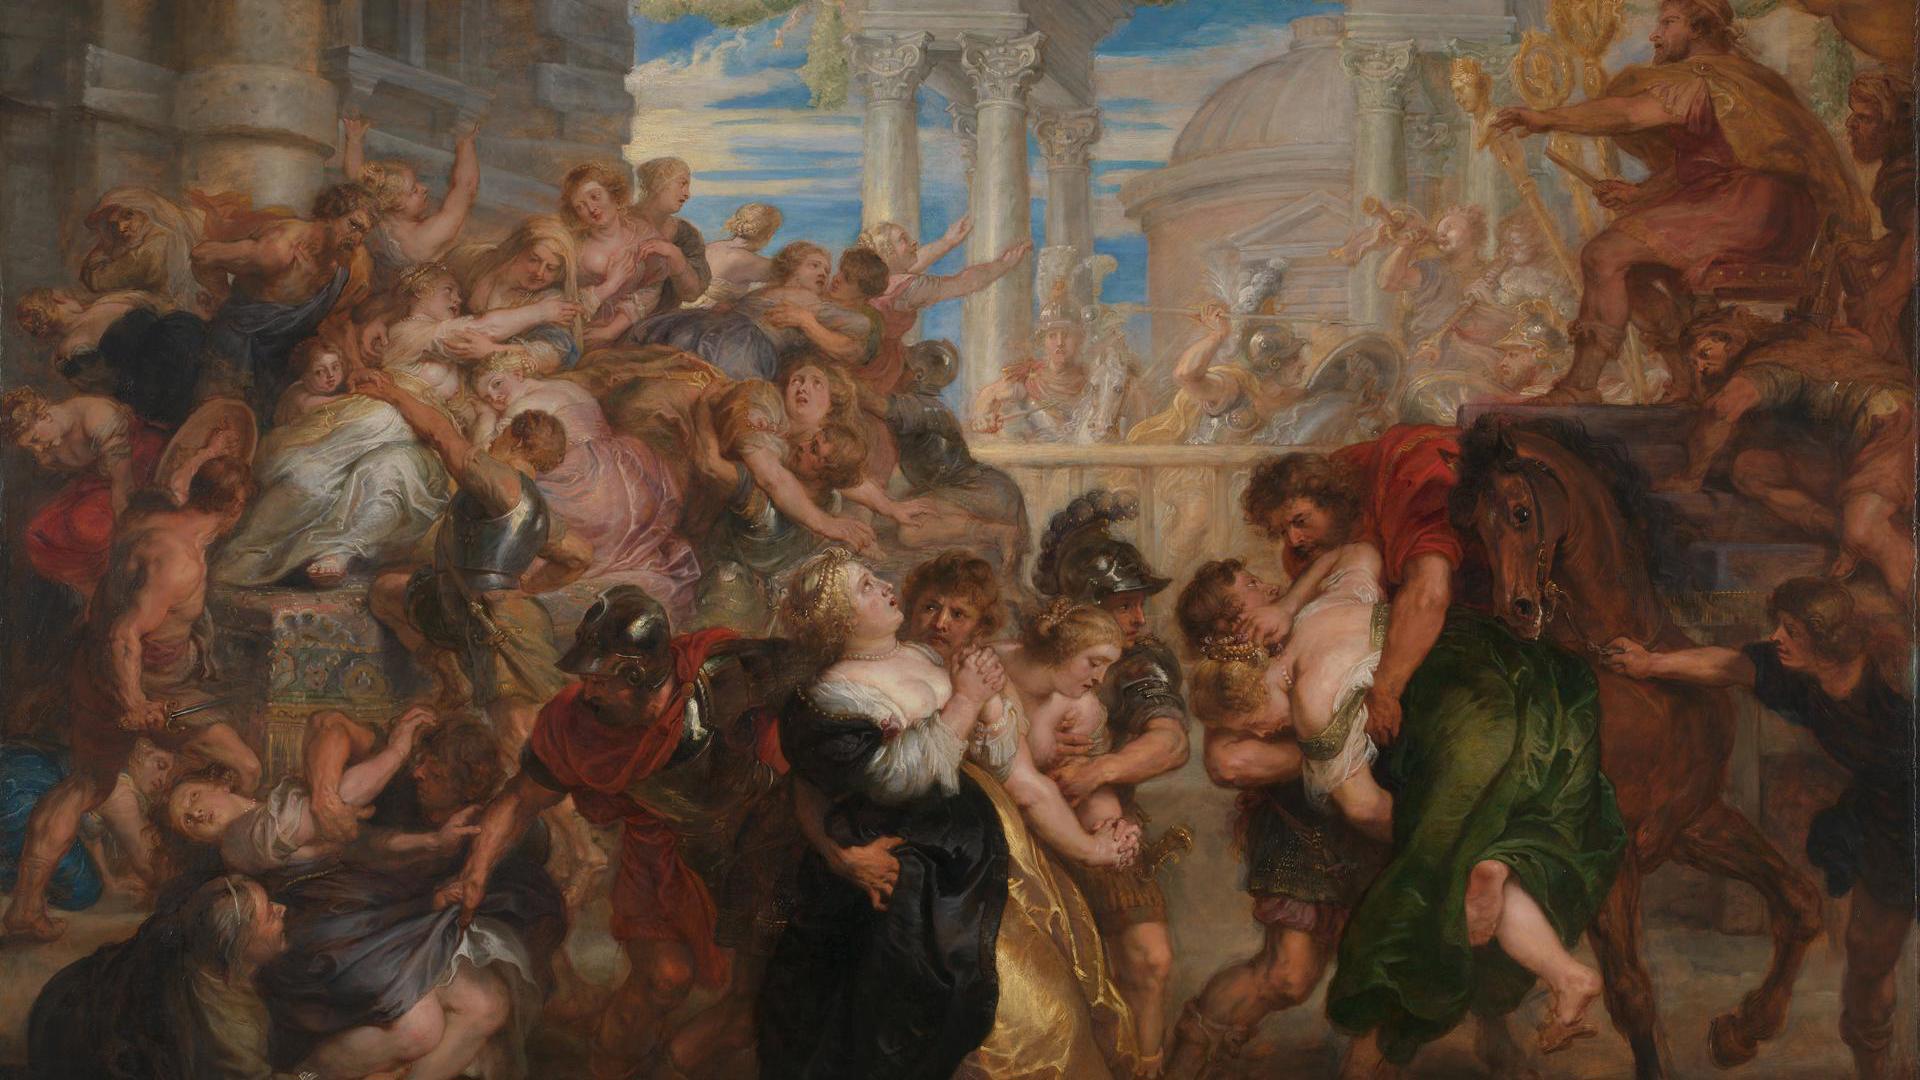 The Rape of the Sabine Women by Peter Paul Rubens